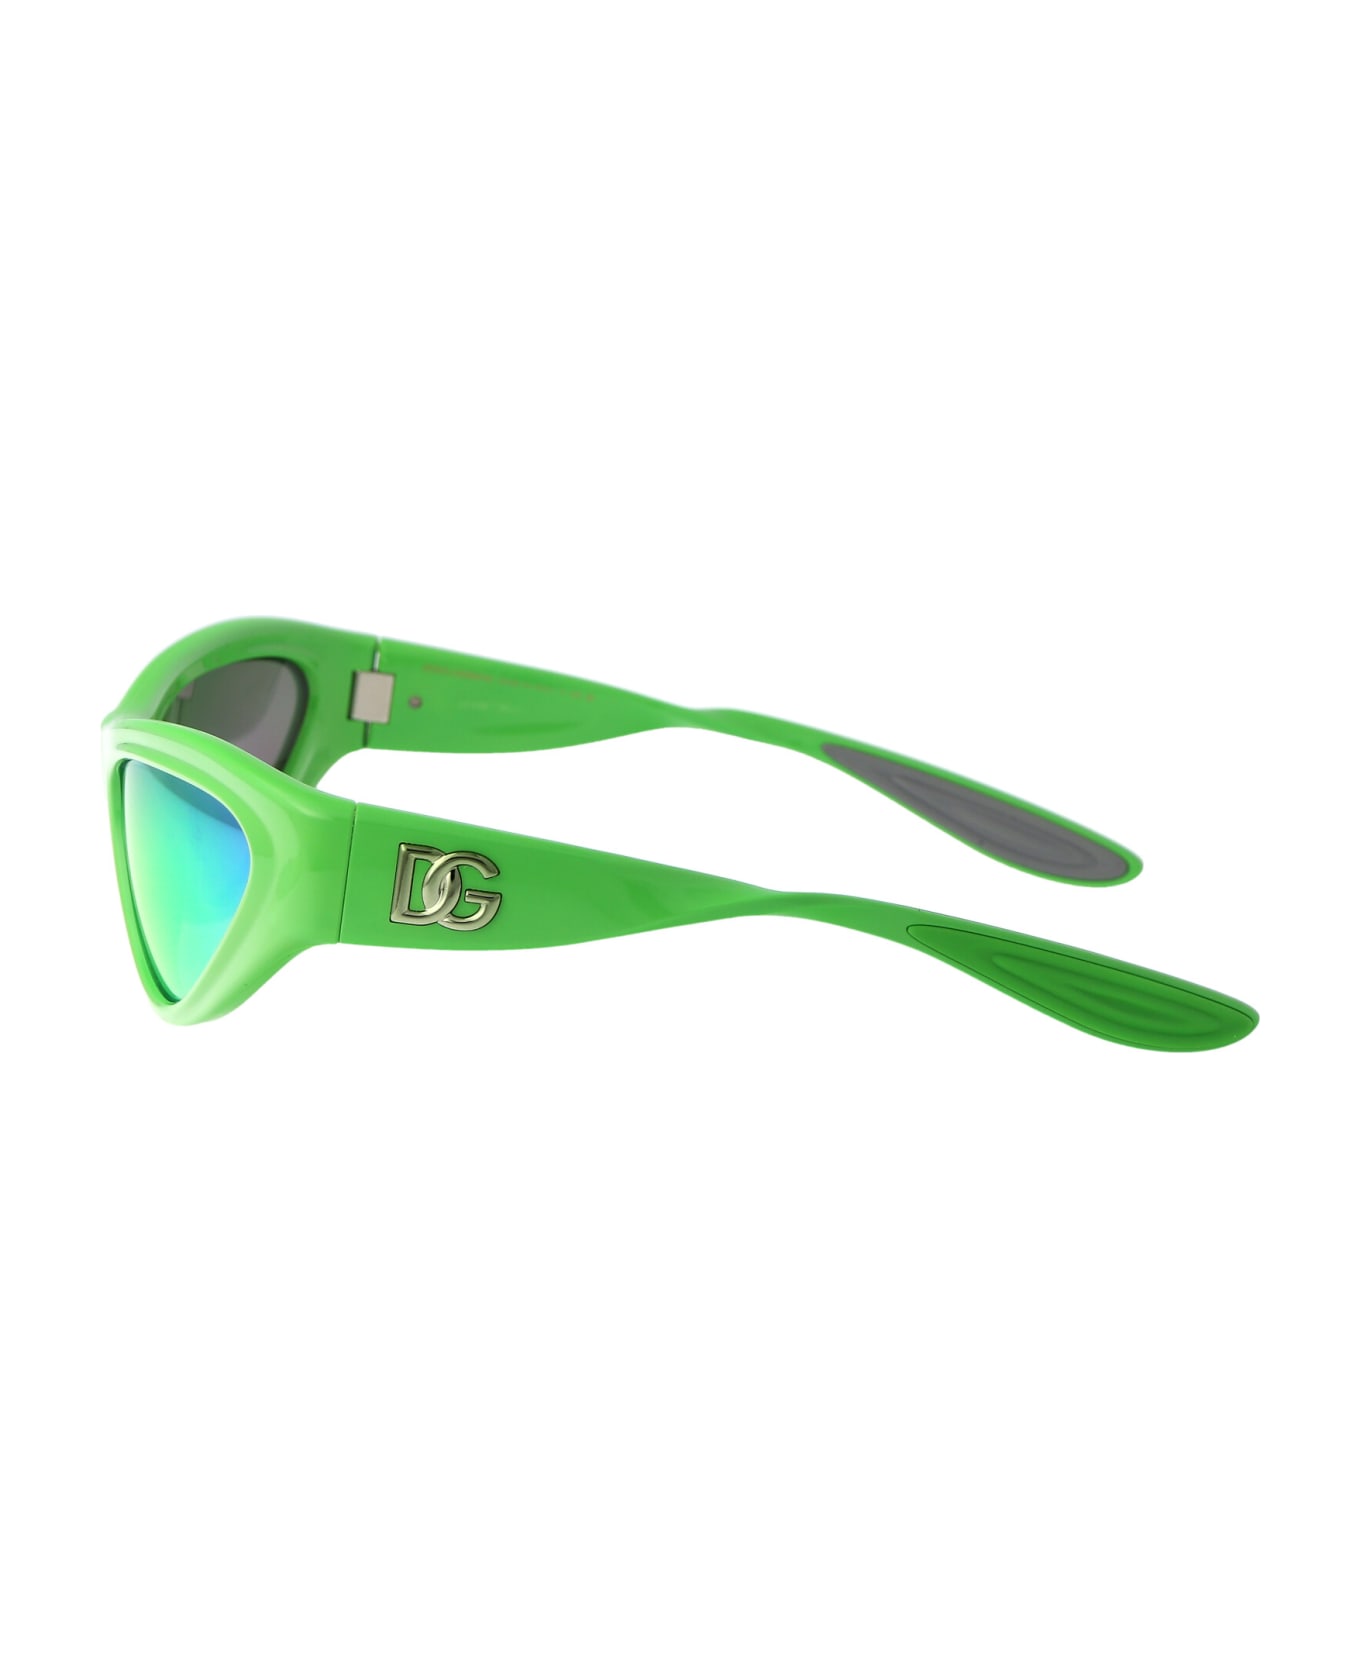 Dolce & Gabbana Eyewear 0dg6190 Sunglasses - 3311F2 Green サングラス